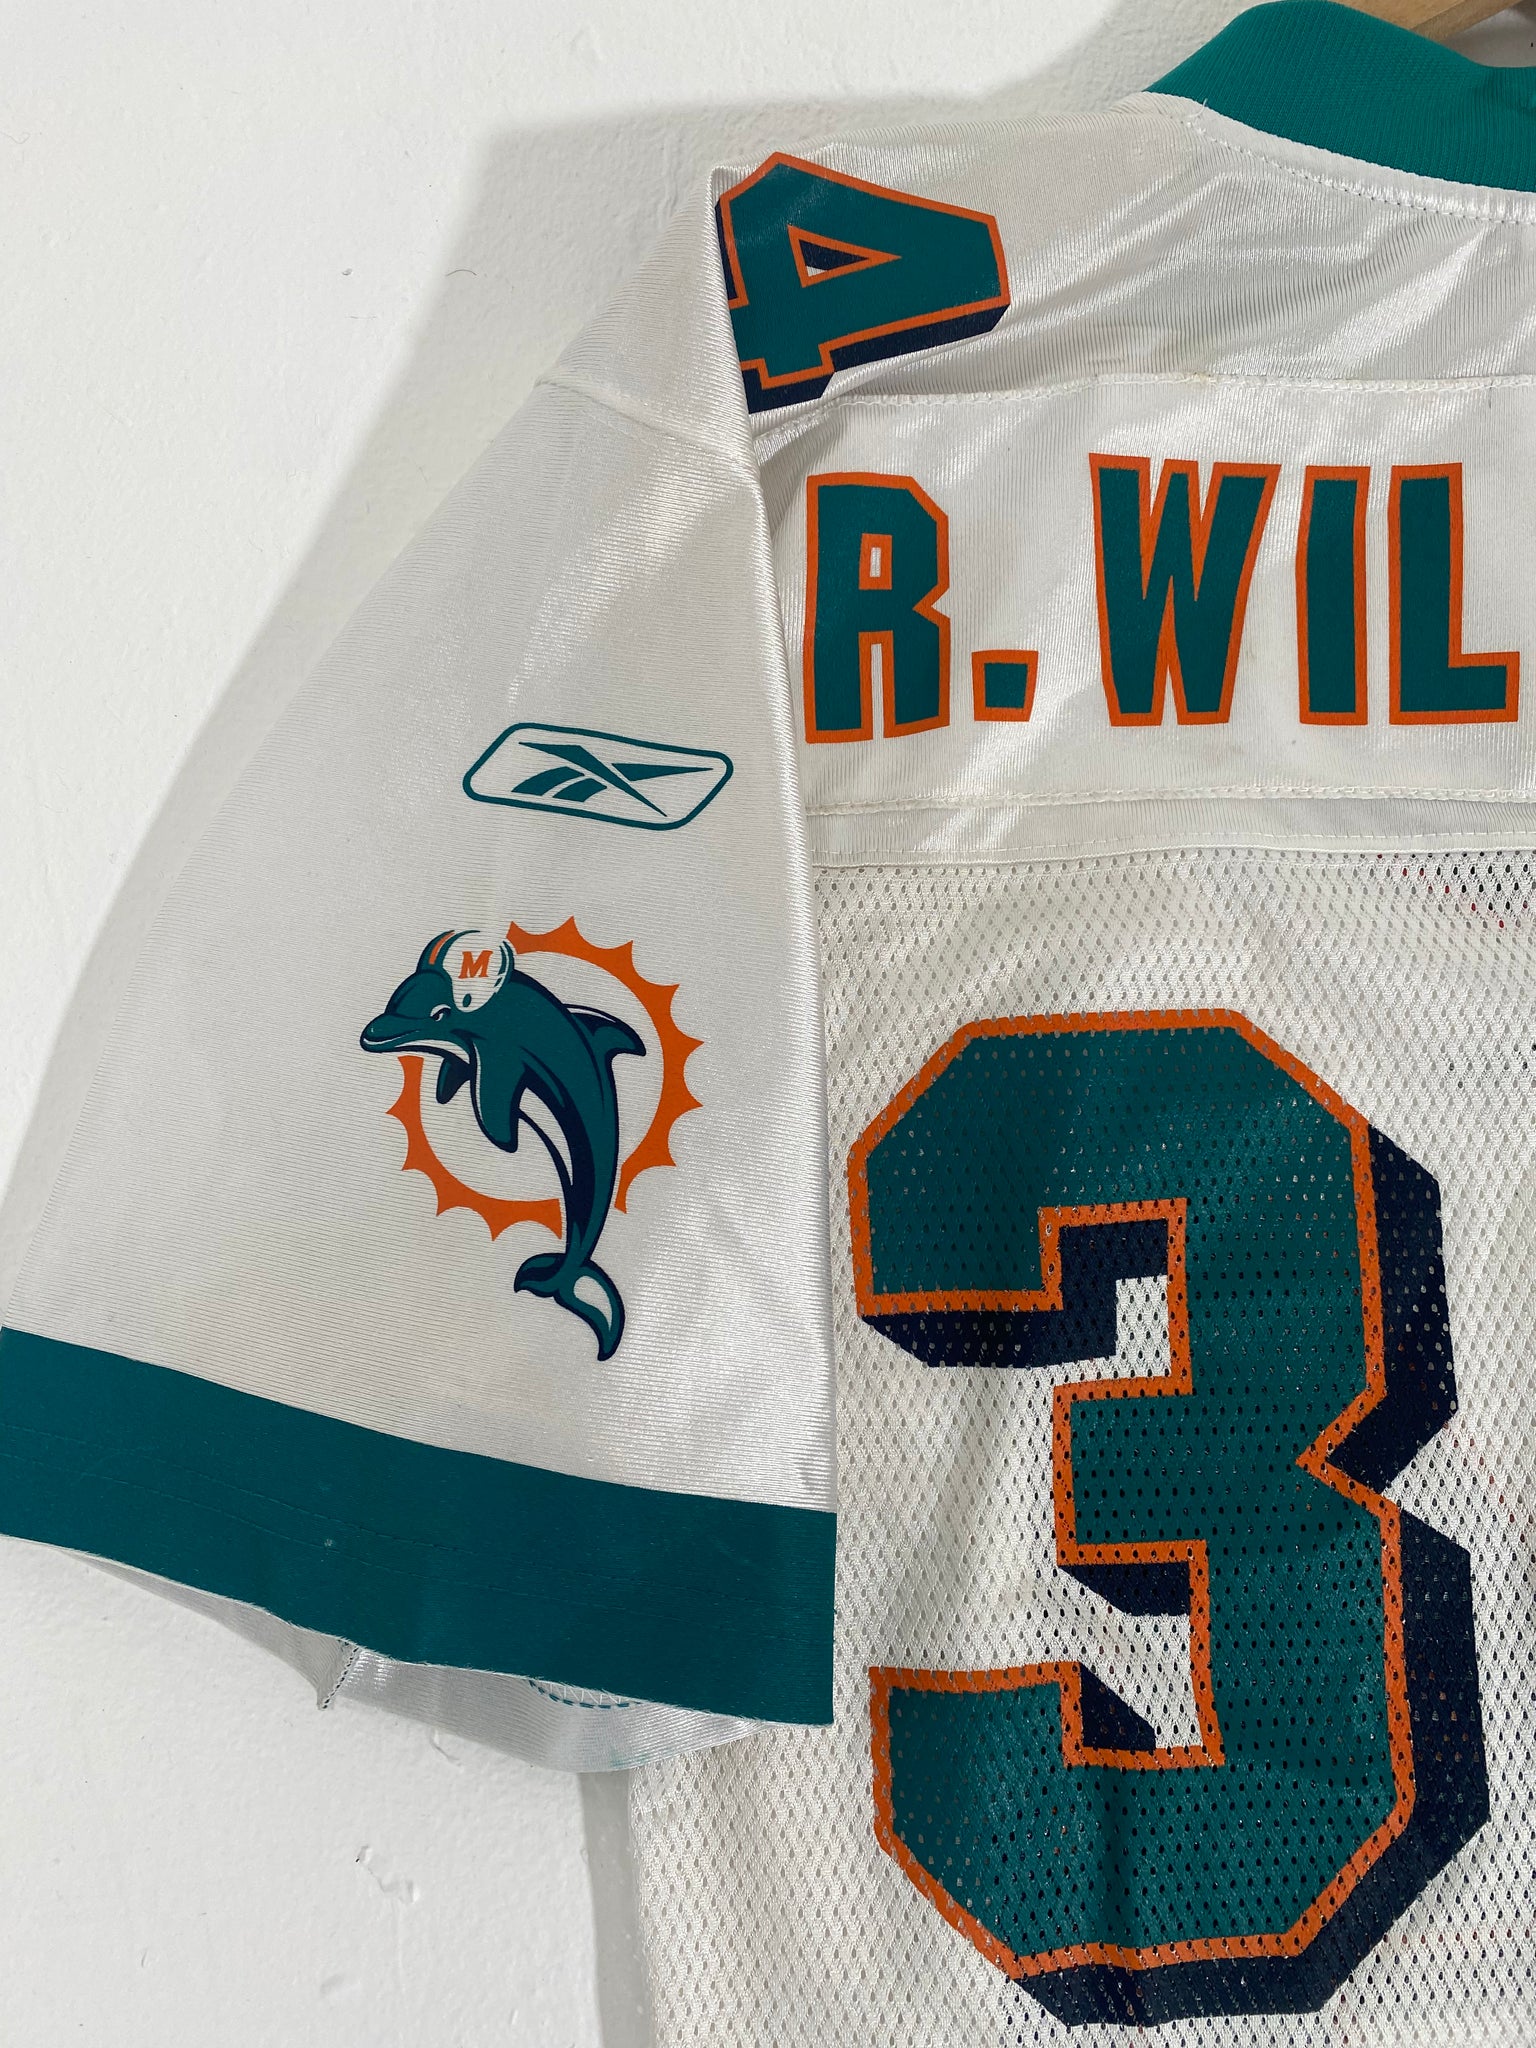 Ricky Williams Miami Dolphins Jerseys, Ricky Williams Shirts, Apparel, Gear